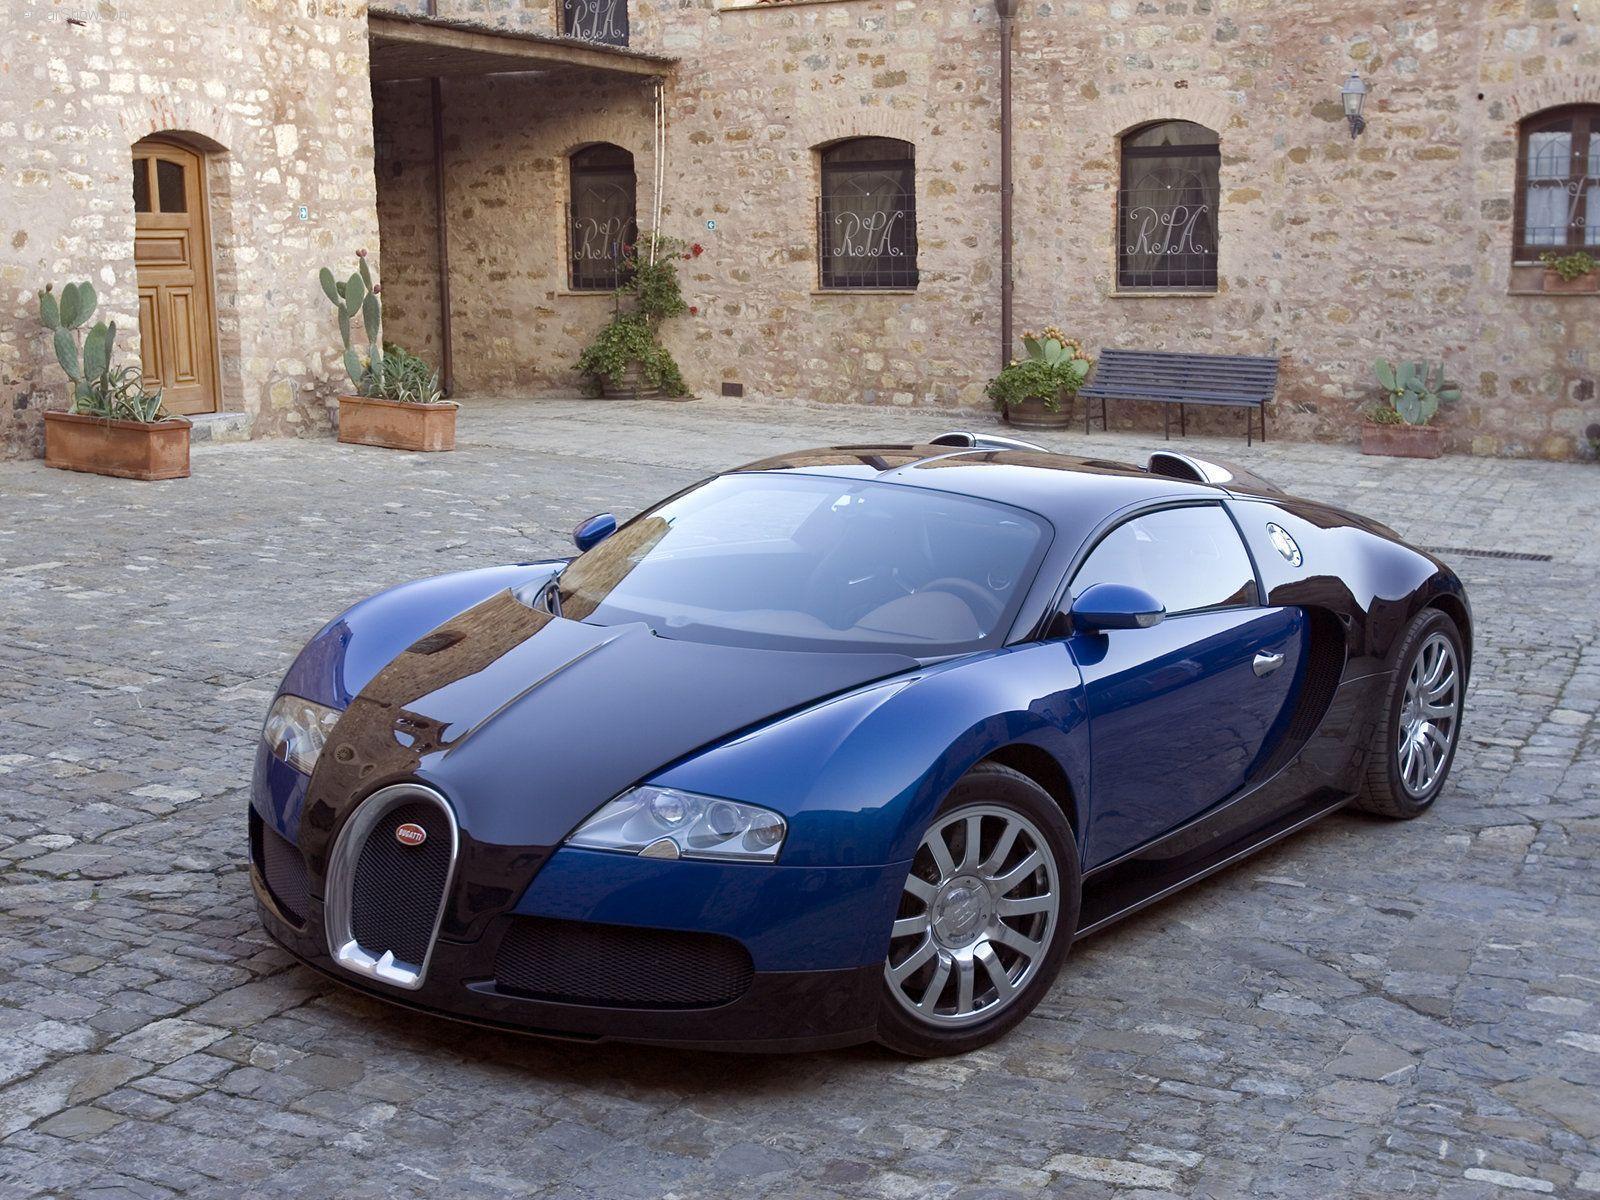 Bugatti Veyron EB 16.4 Photo Image Site, Car Image Site